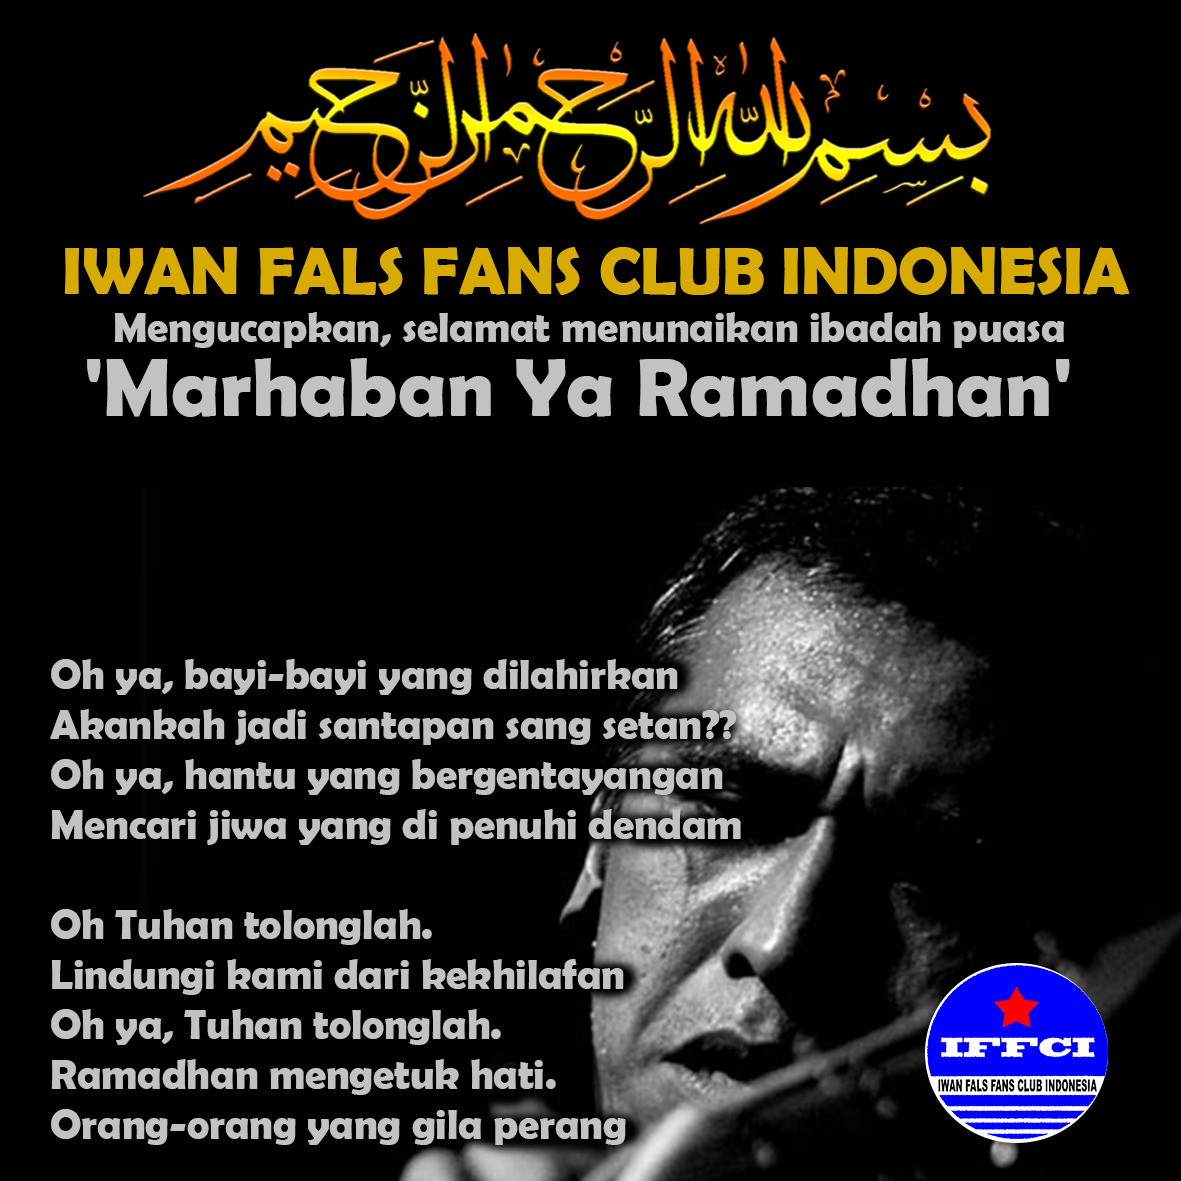 BERITA DAN MUSIK FOTO SAHABAT IFFCI IWAN FALS FANS CLUB INDONESIA